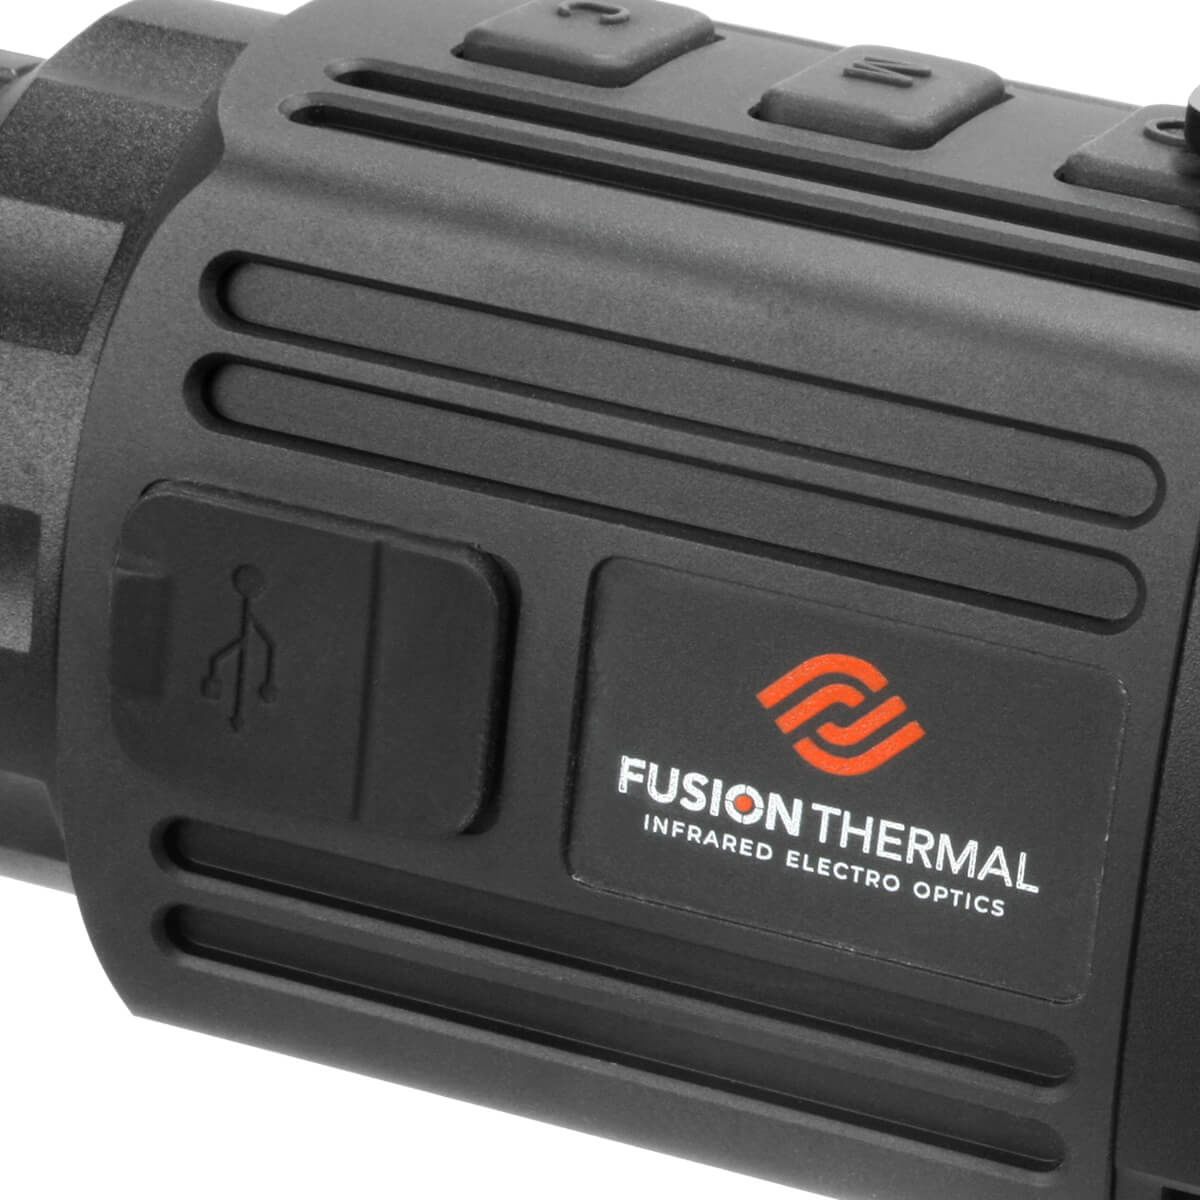 Fusion Thermal Recon 3 - USB Port